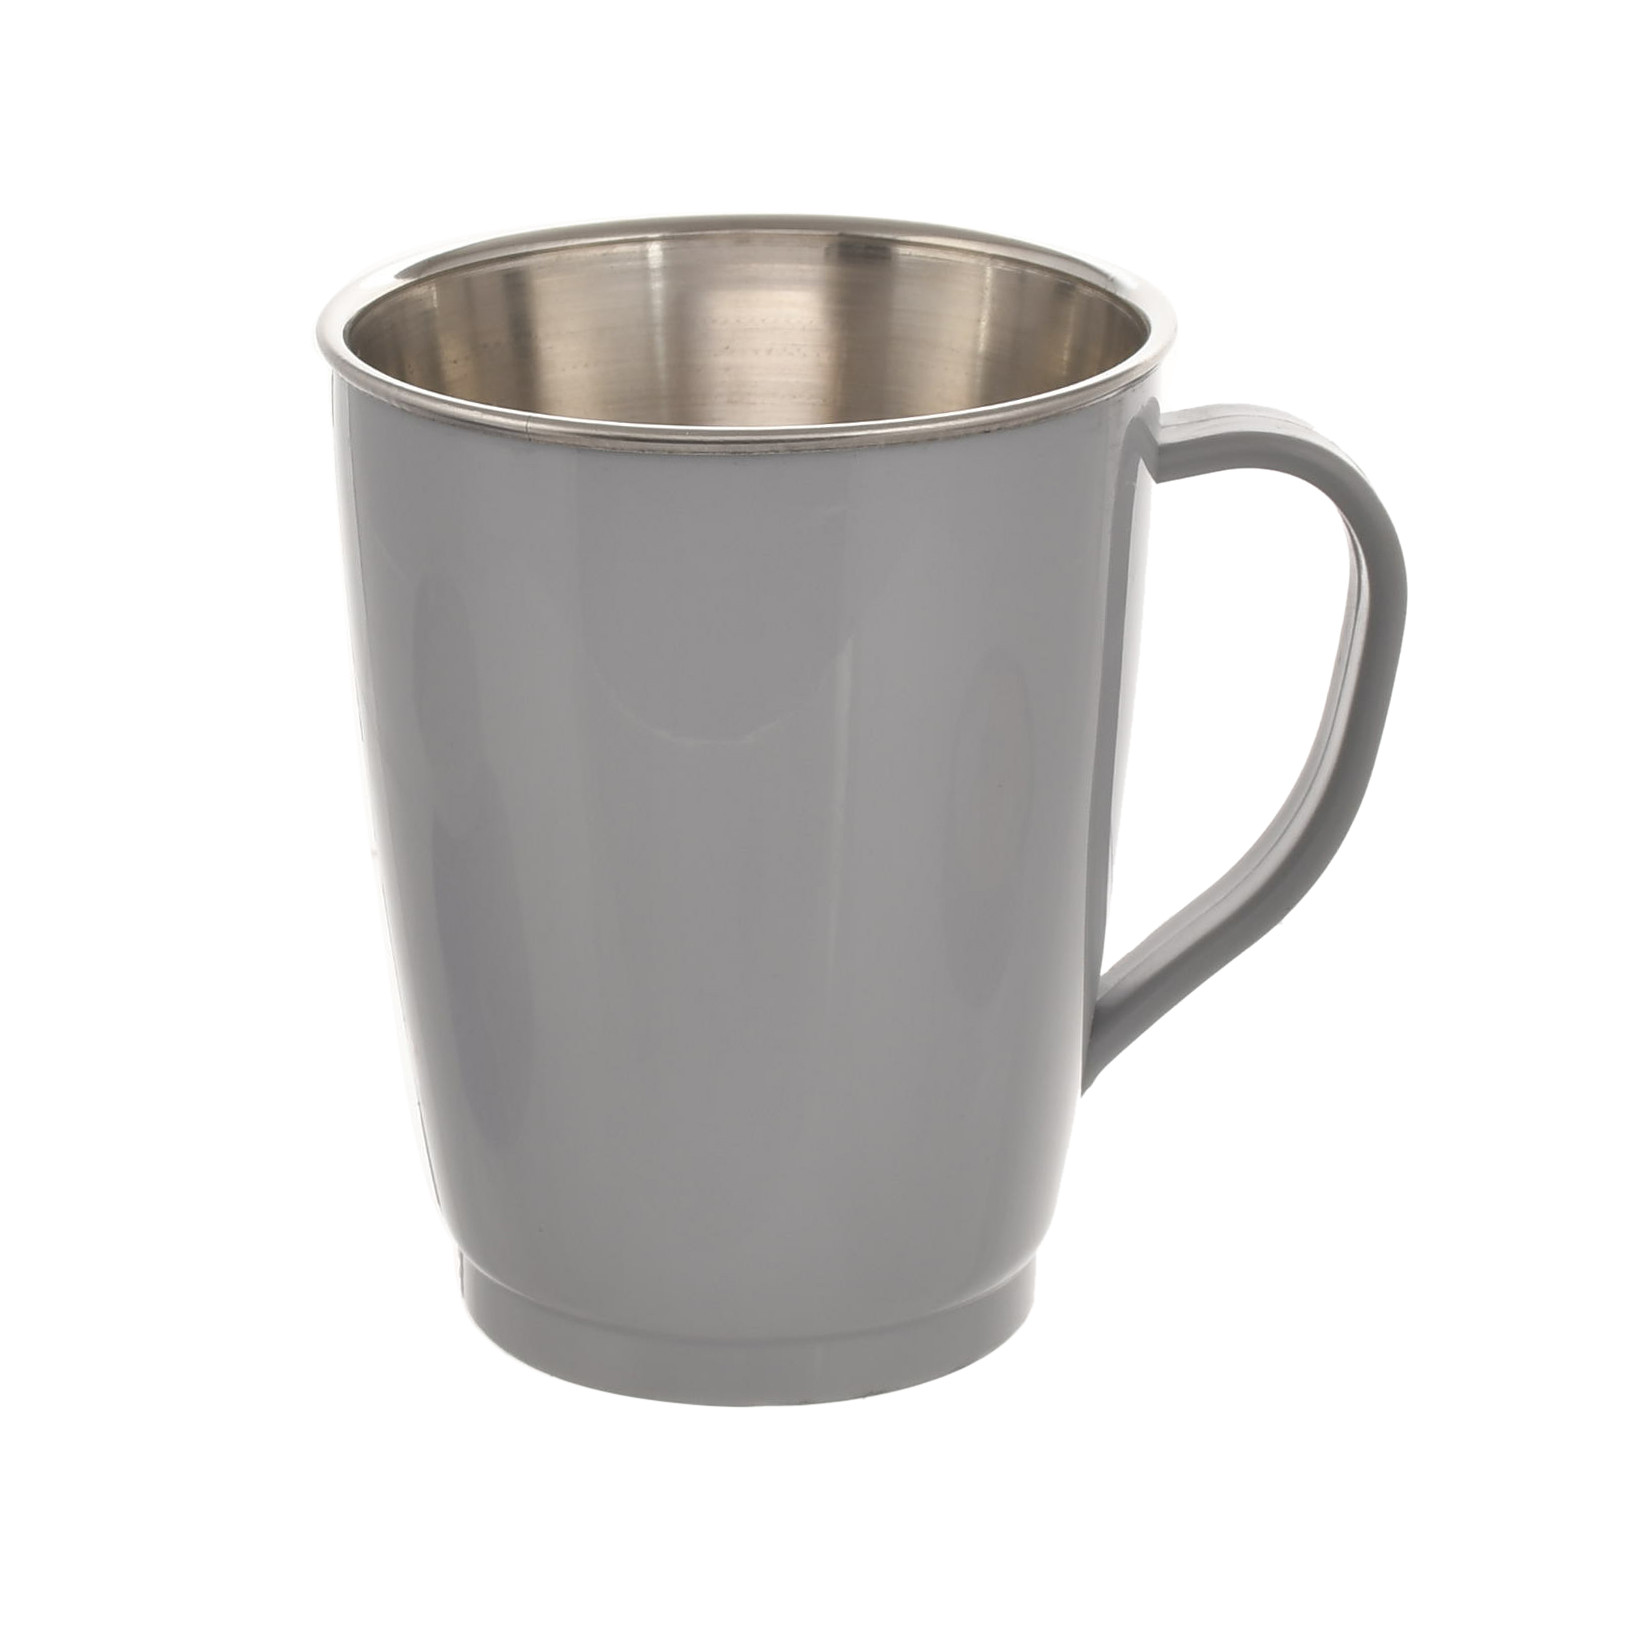 Kuber Industries Disney Printed Food Grade BPA Free Tea/Coffee Mug for Coffee Tea Cocoa, Camping Mugs with Lid, Pack of 2 (Light Grey & Cream)